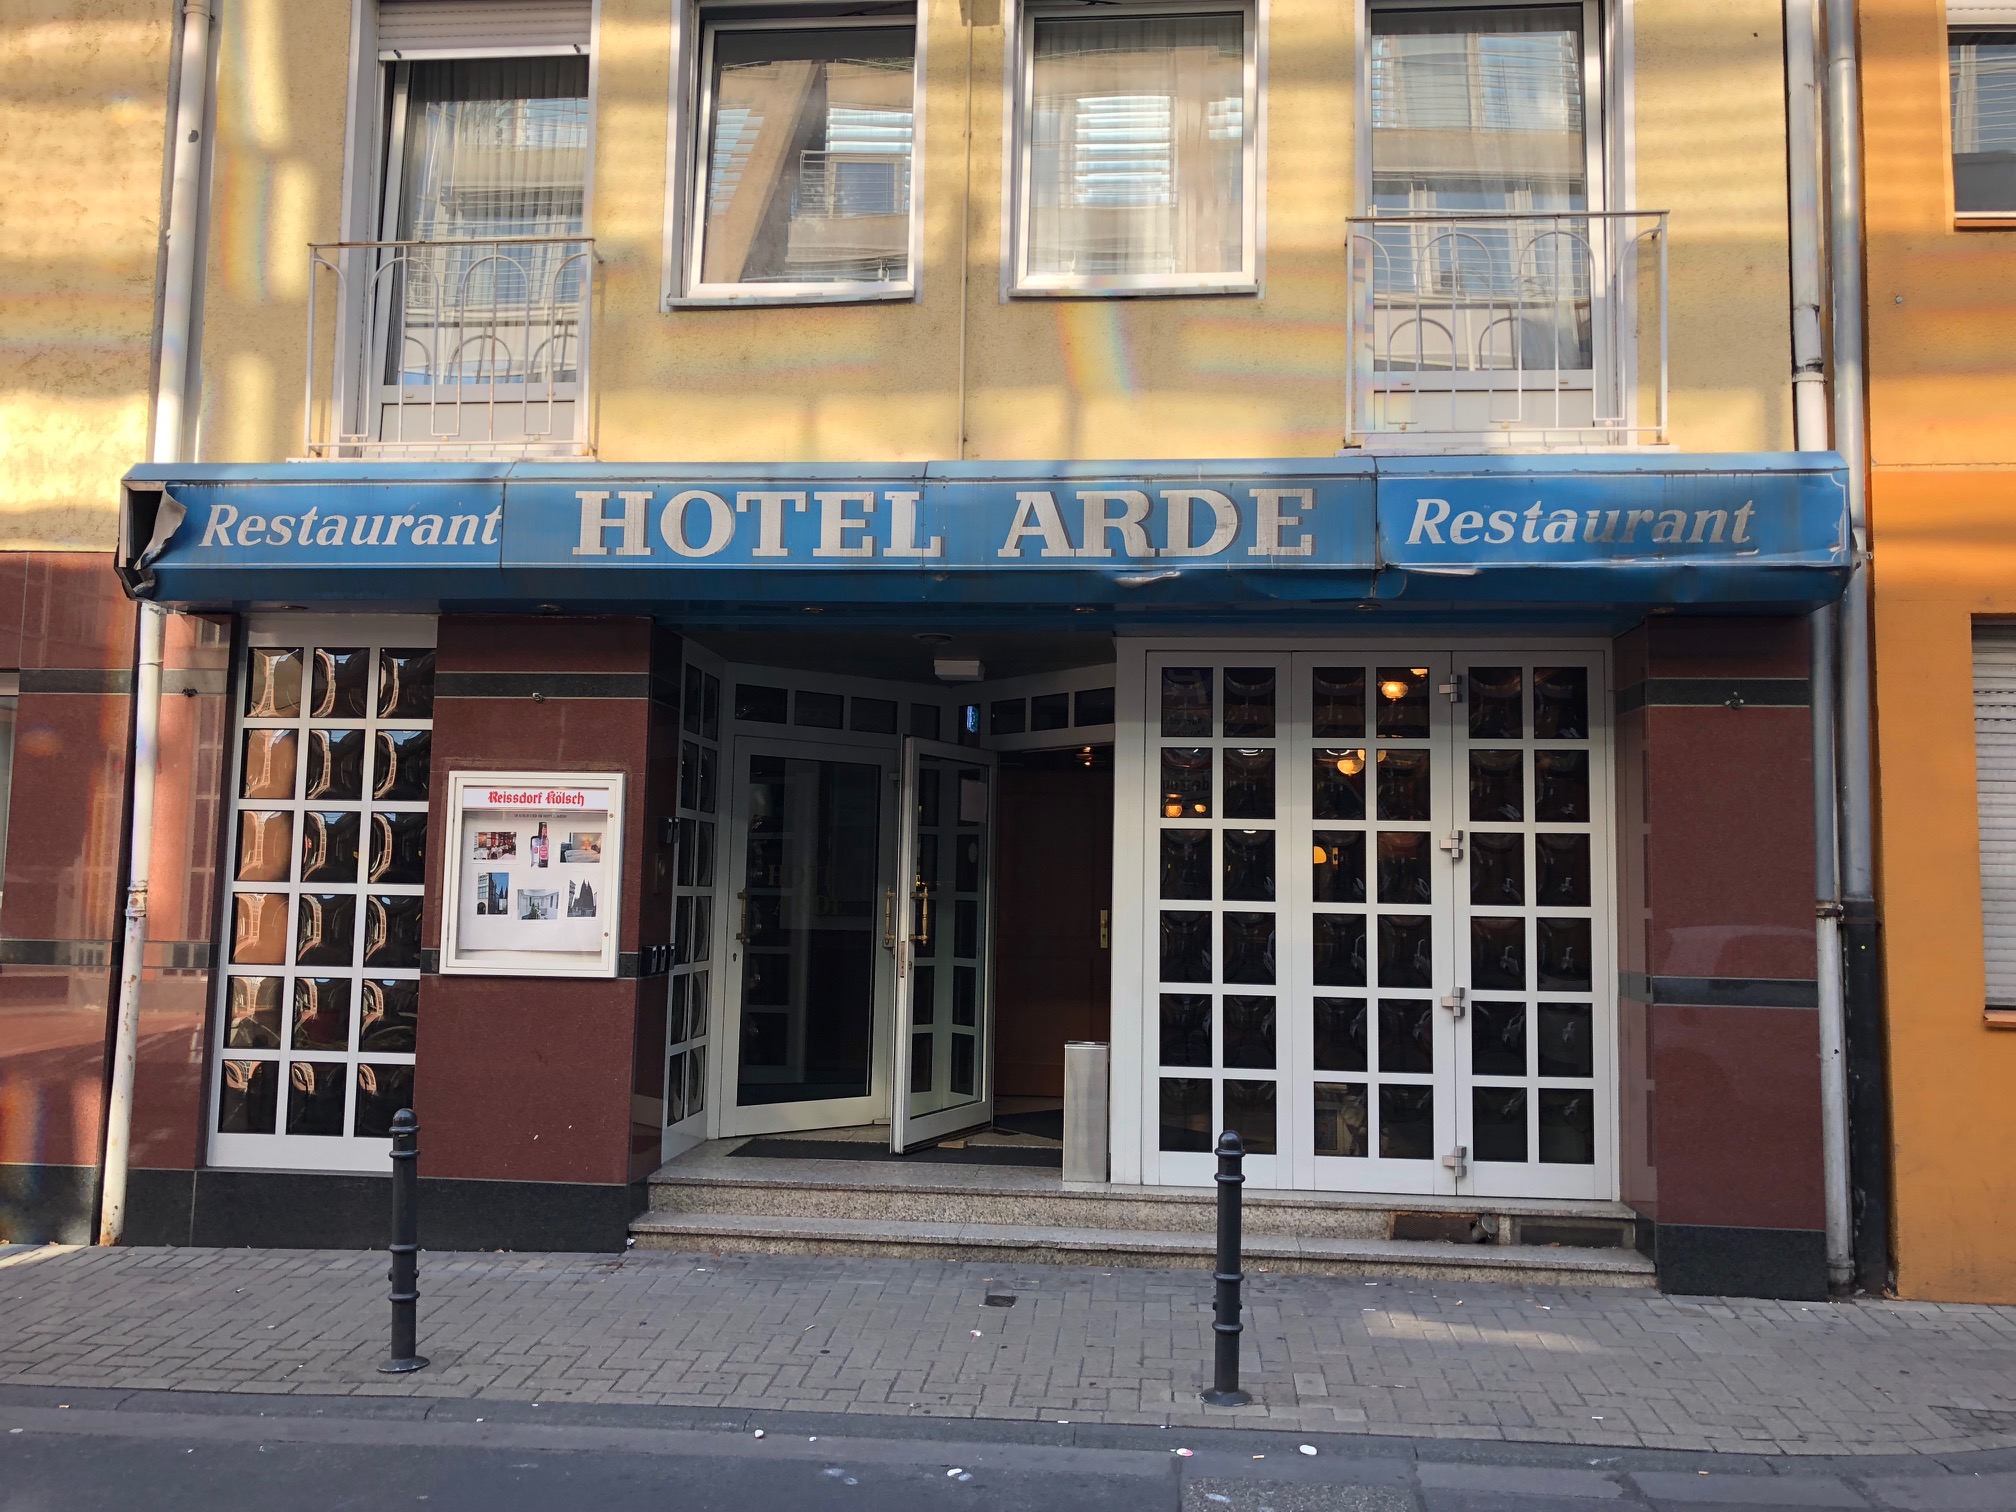 Hotel Arde, found on Booking.com